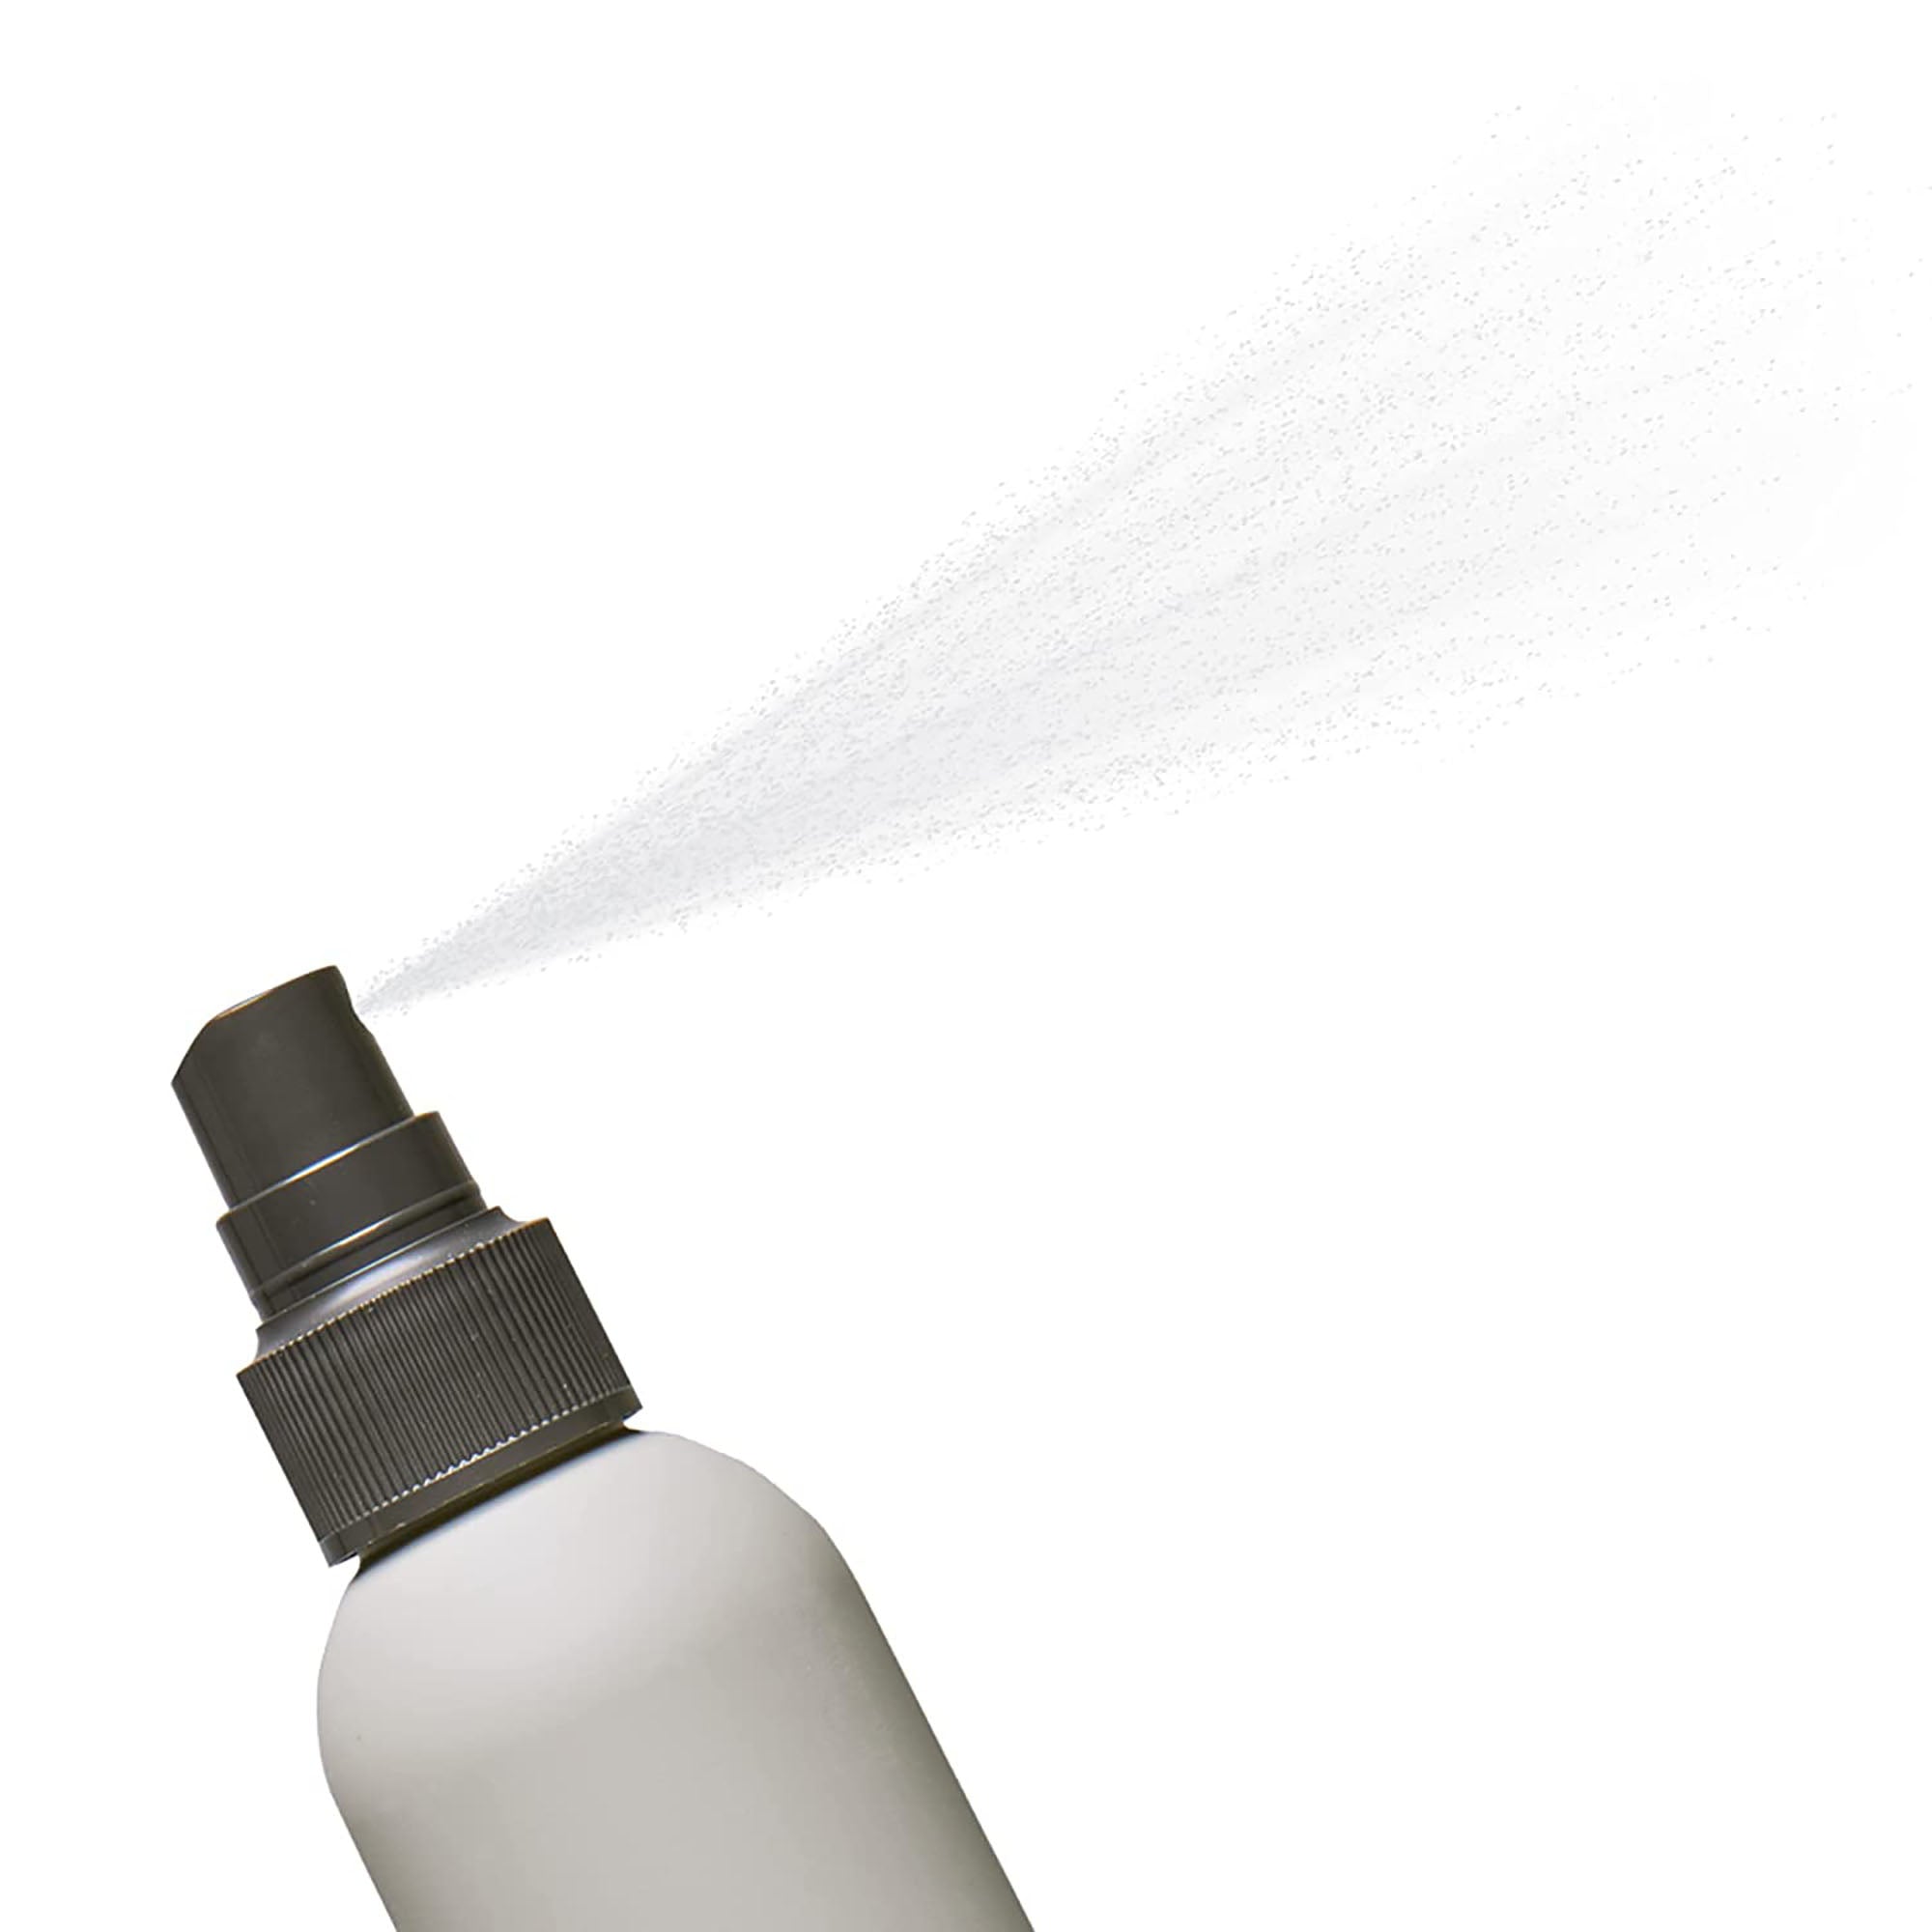 KMS Thermashape Hot Flex Spray / 6.7OZ